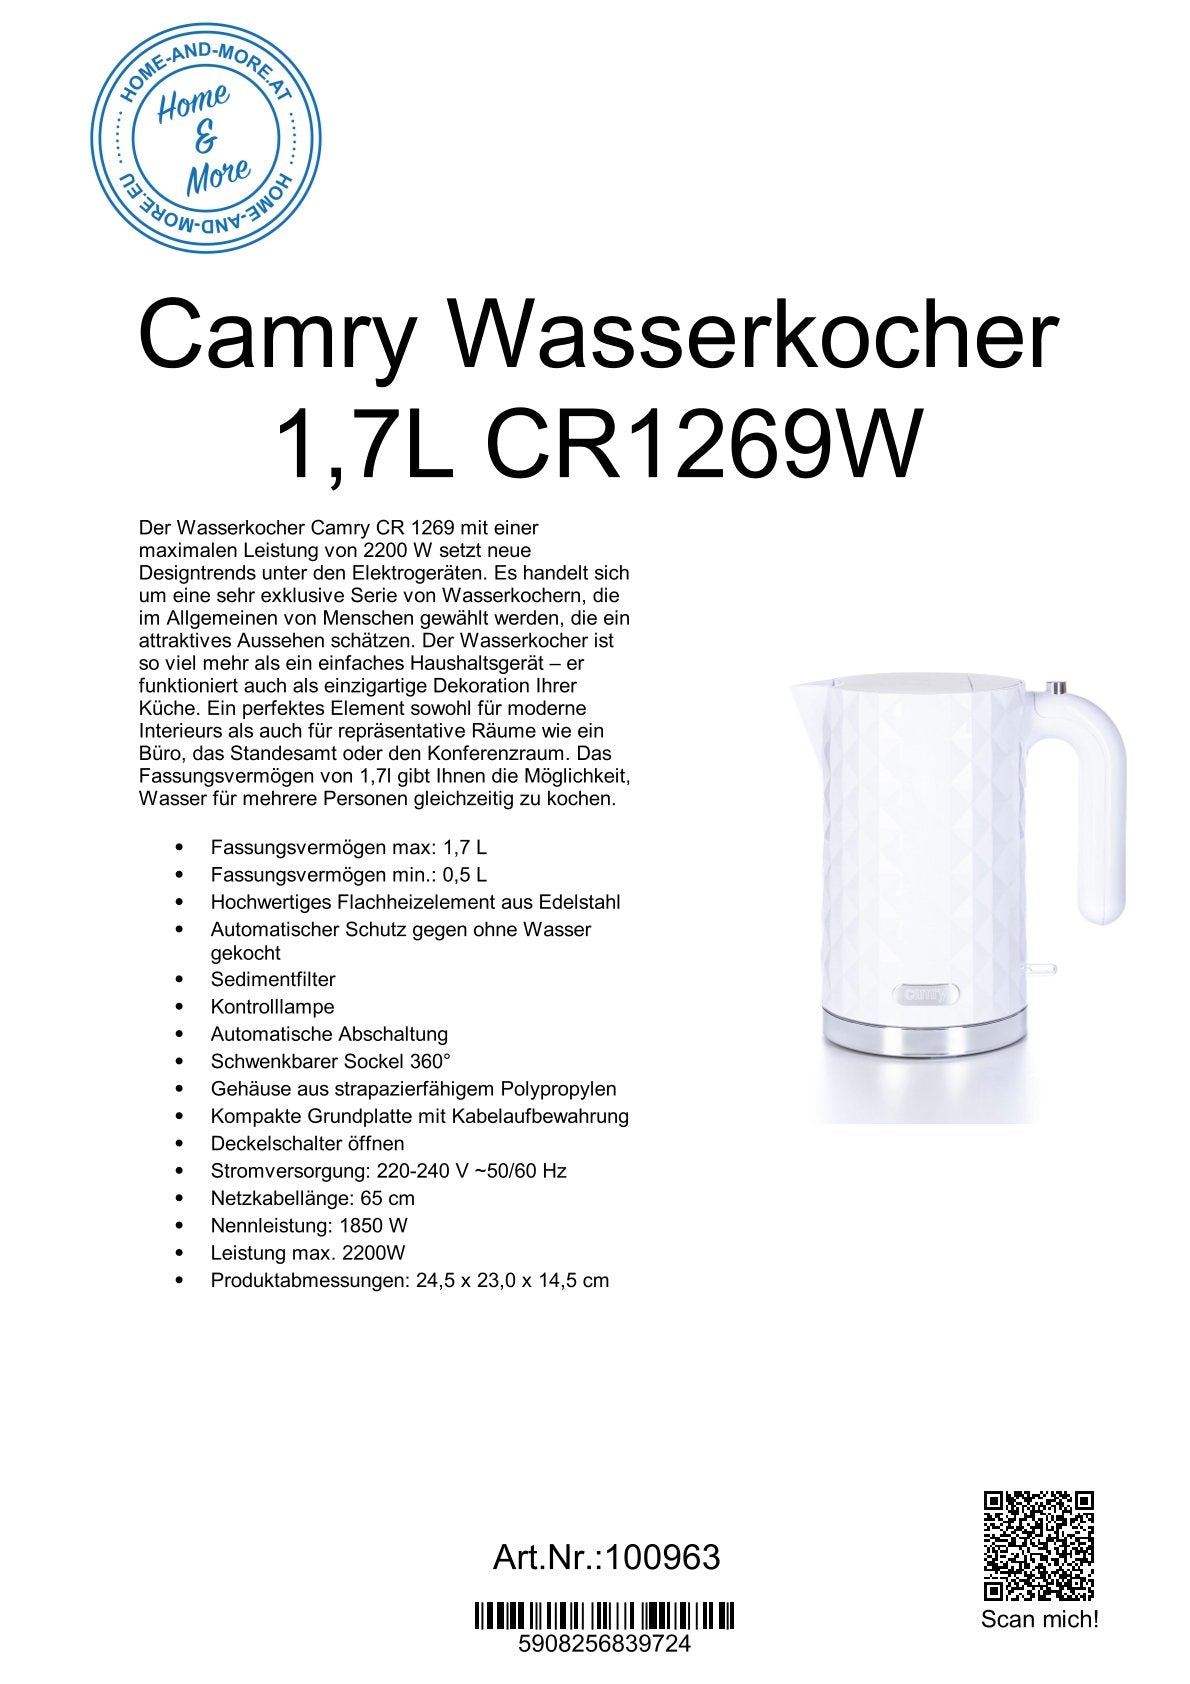 Camry Wasserkocher  1,7L CR1269w